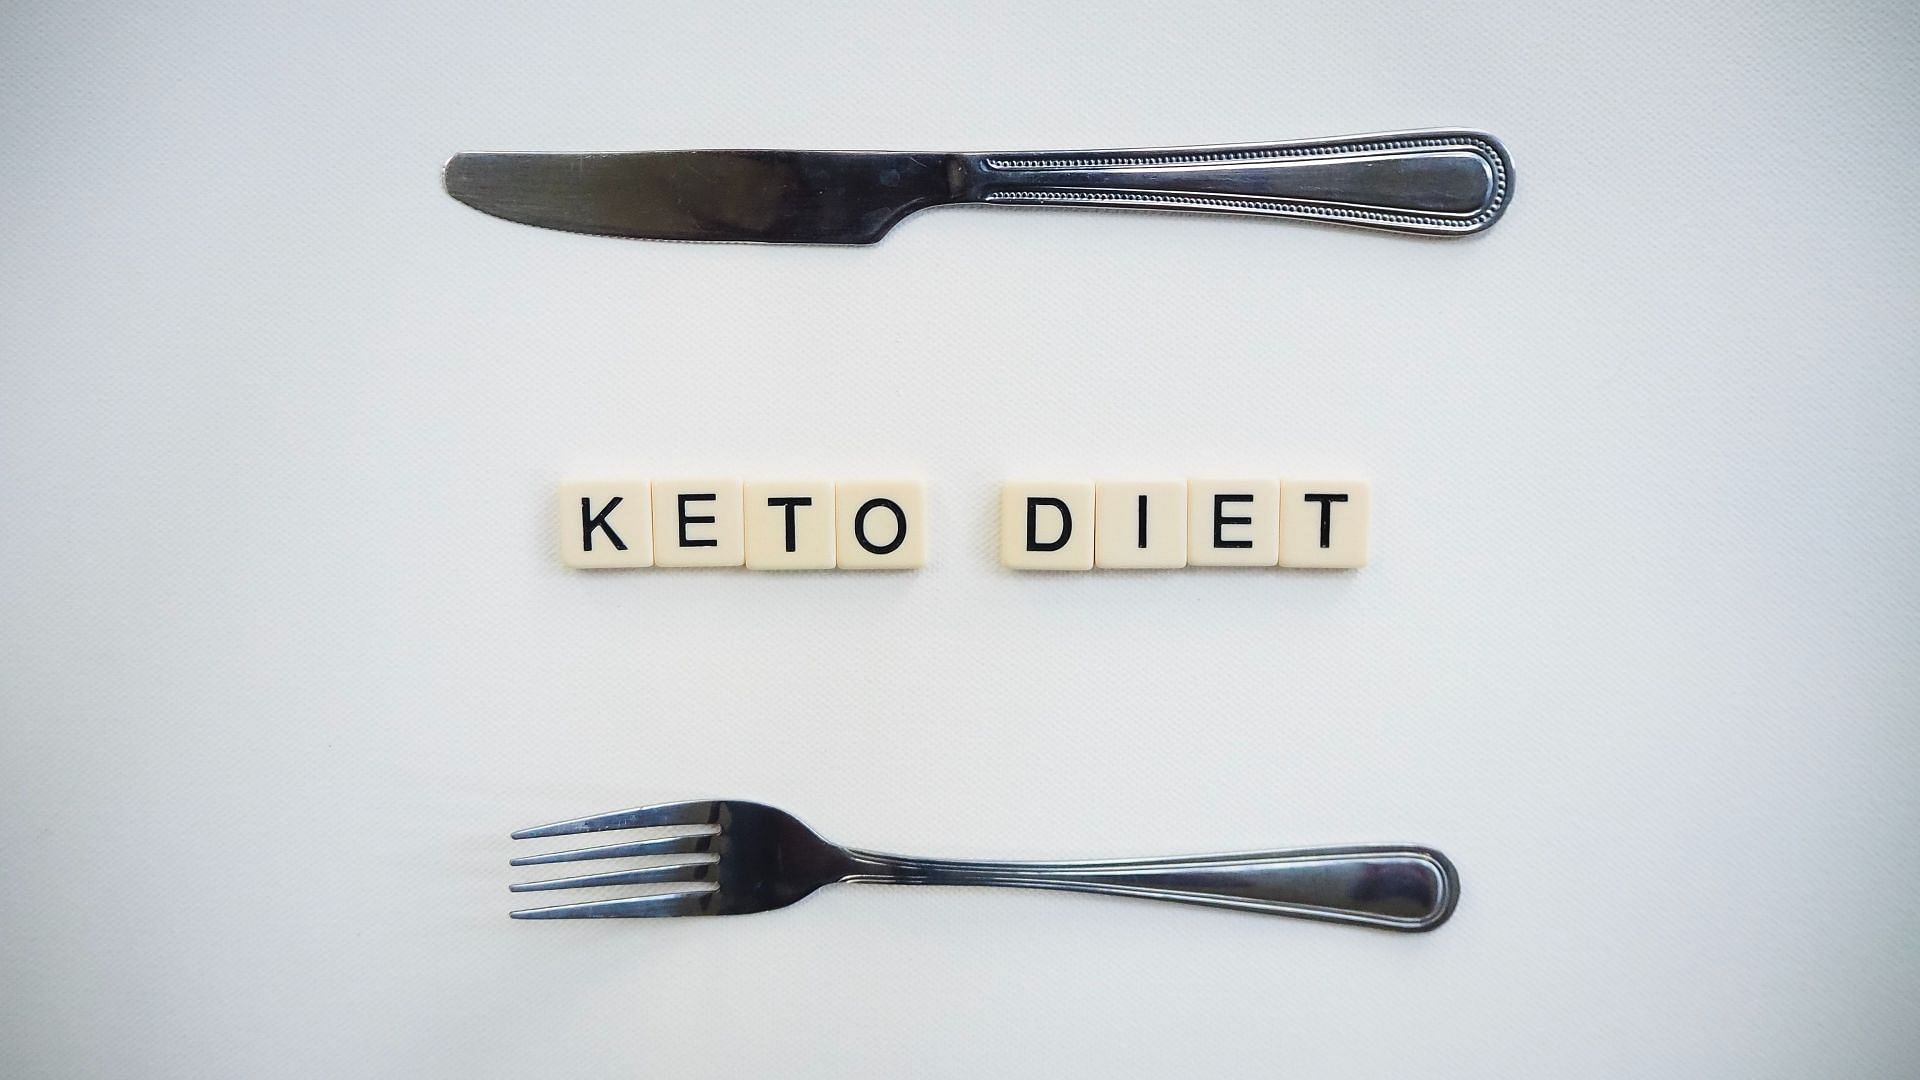 Keto diet may impact your heart health. (Image via Unsplash / Total Shape)